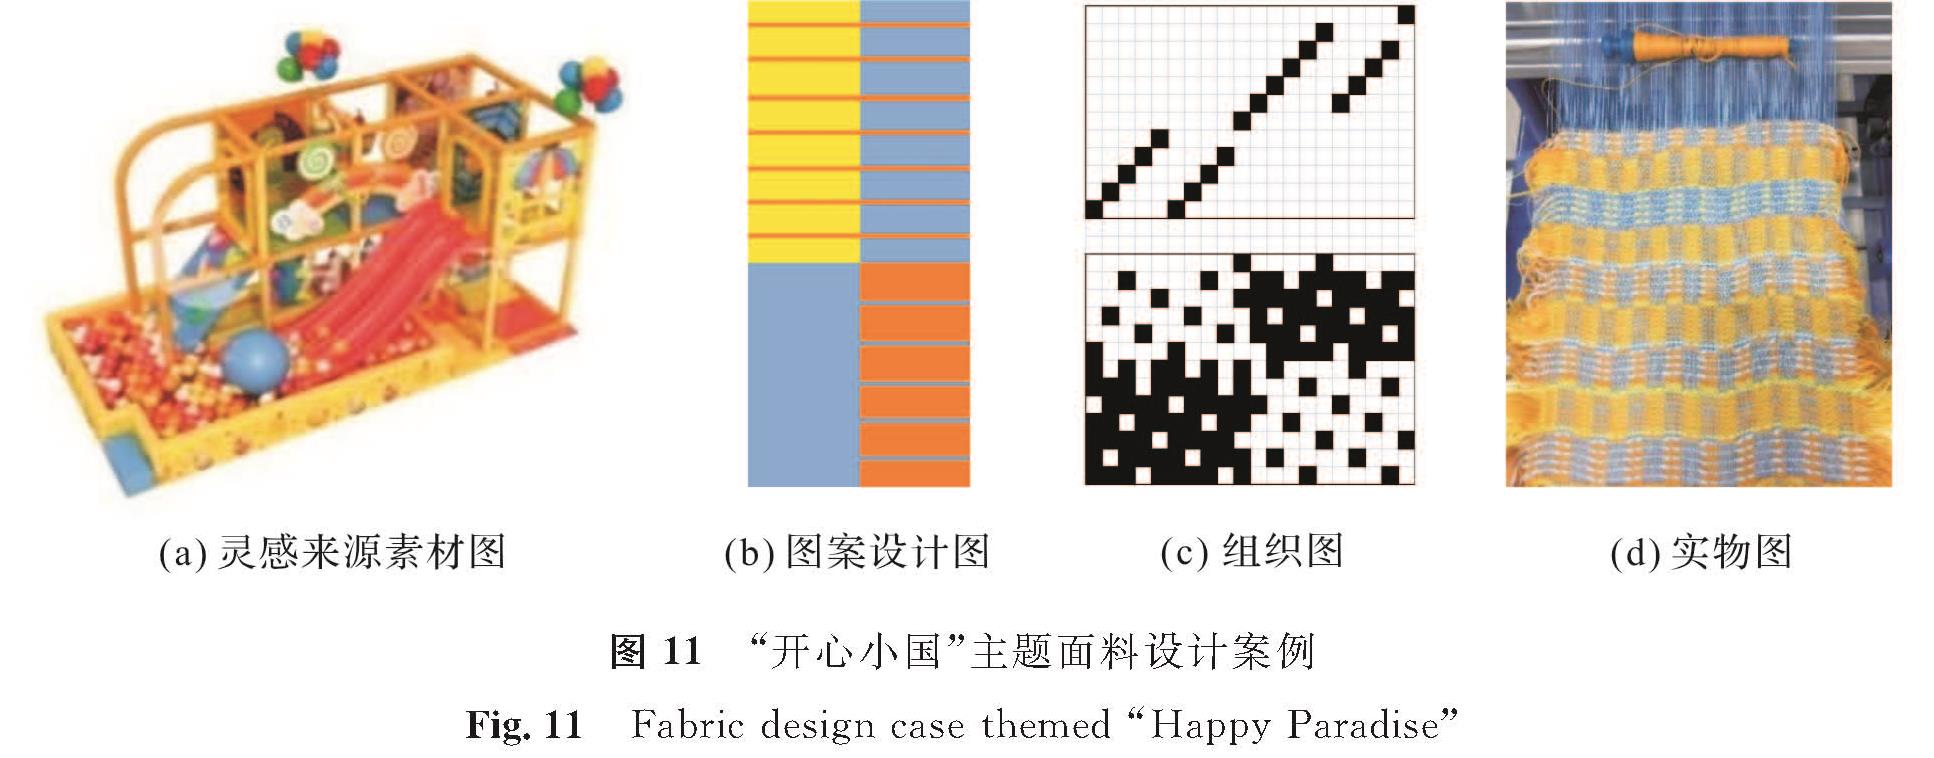 图 11 “开心小国”主题面料设计案例<br/>Fig.11 Fabric design case themed “Happy Paradise”